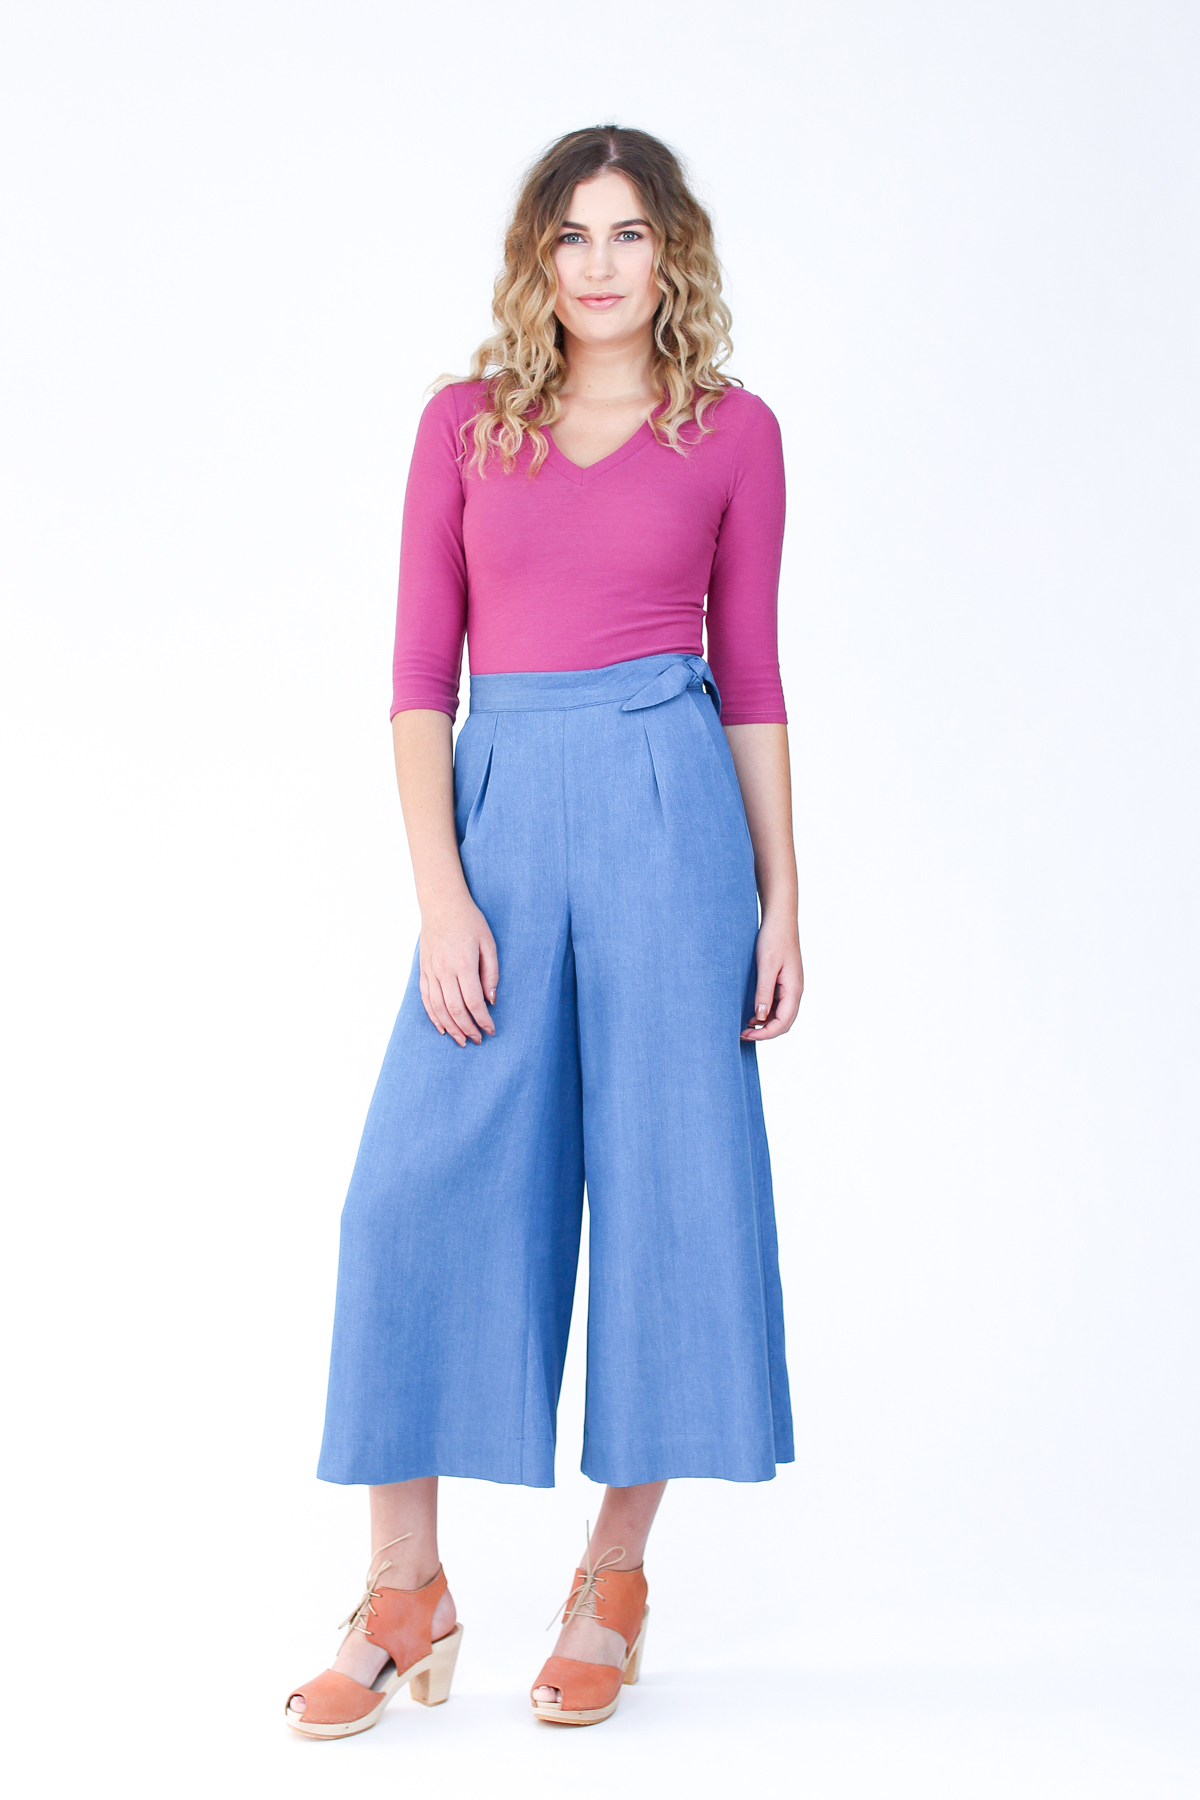 Rowan Bodysuit and Flint pants by Megan Nielsen Patterns